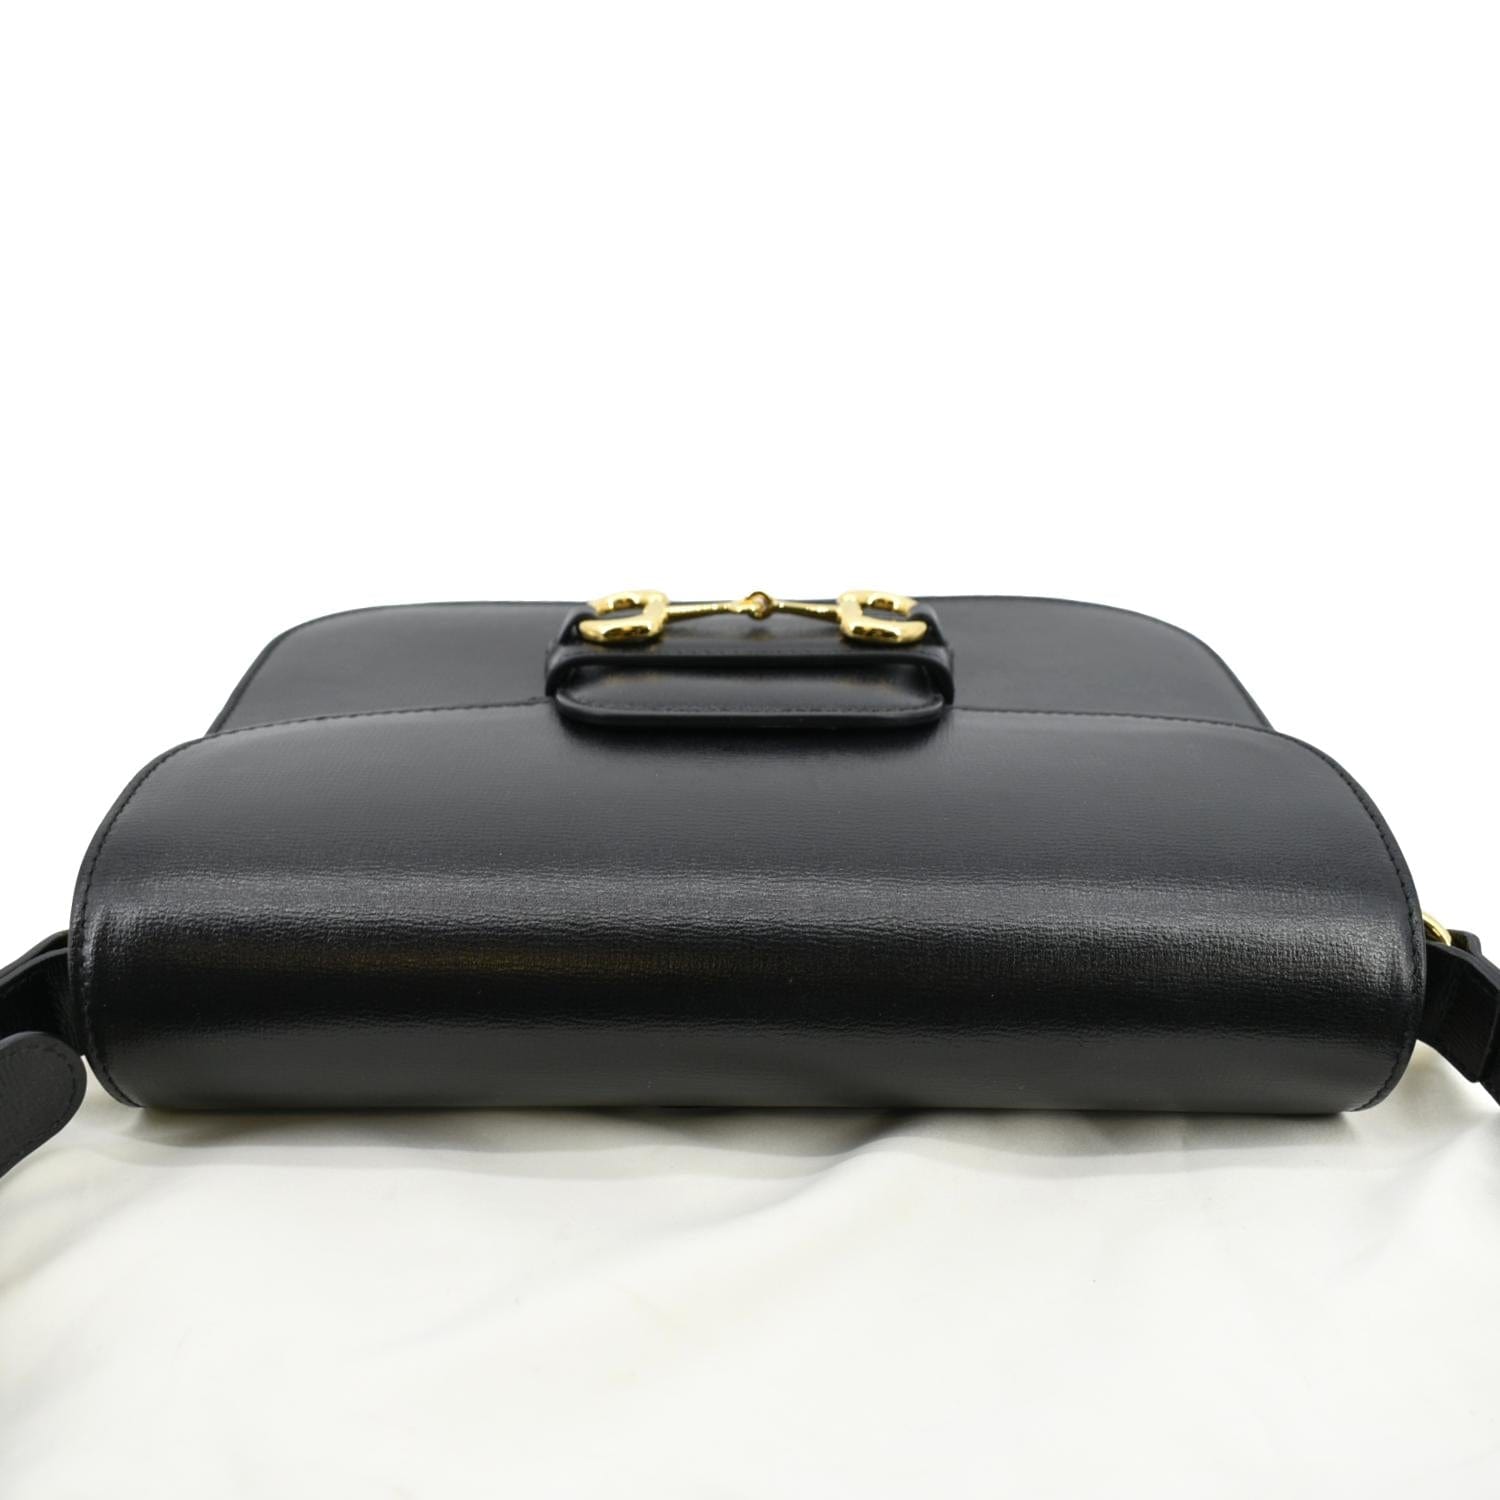 GUCCI 1955 Horsebit Small Shoulder Bag in Black Leather